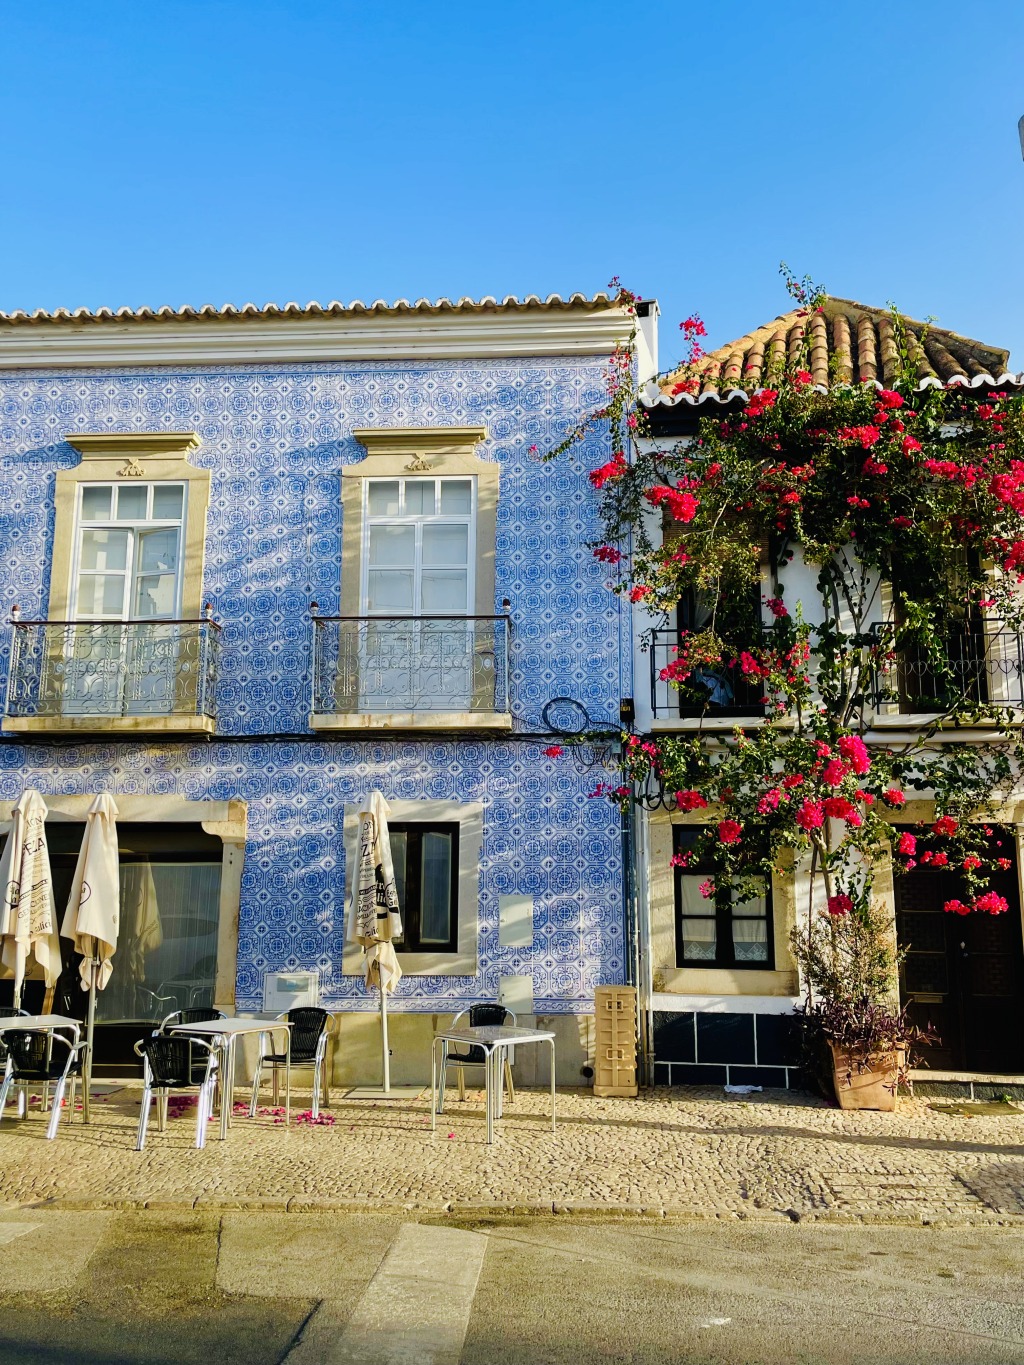 Tavira Portugal: The Hidden Gem of the Algarve Region